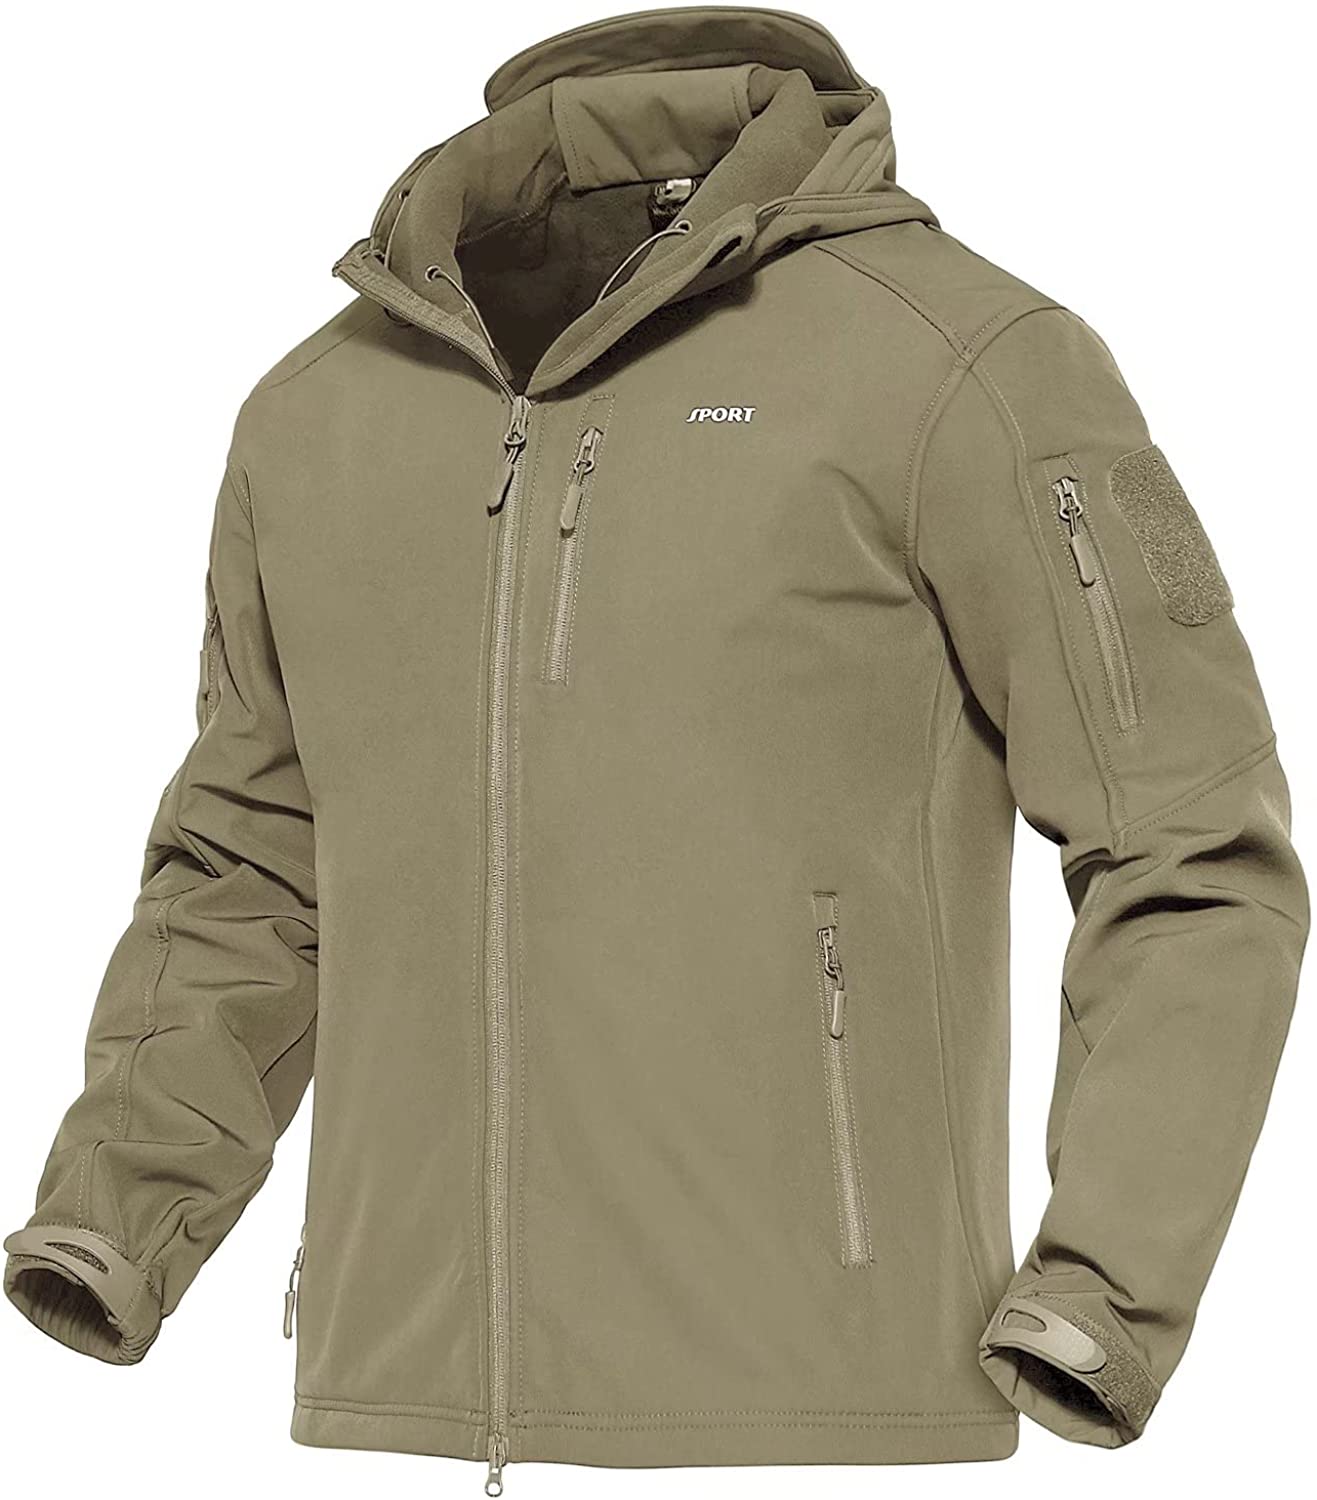 MAGCOMSEN Men's Winter Coats Waterproof Ski Snow Jacket Warm Fleece Jacket Parka Raincoats With Multi-Pockets 